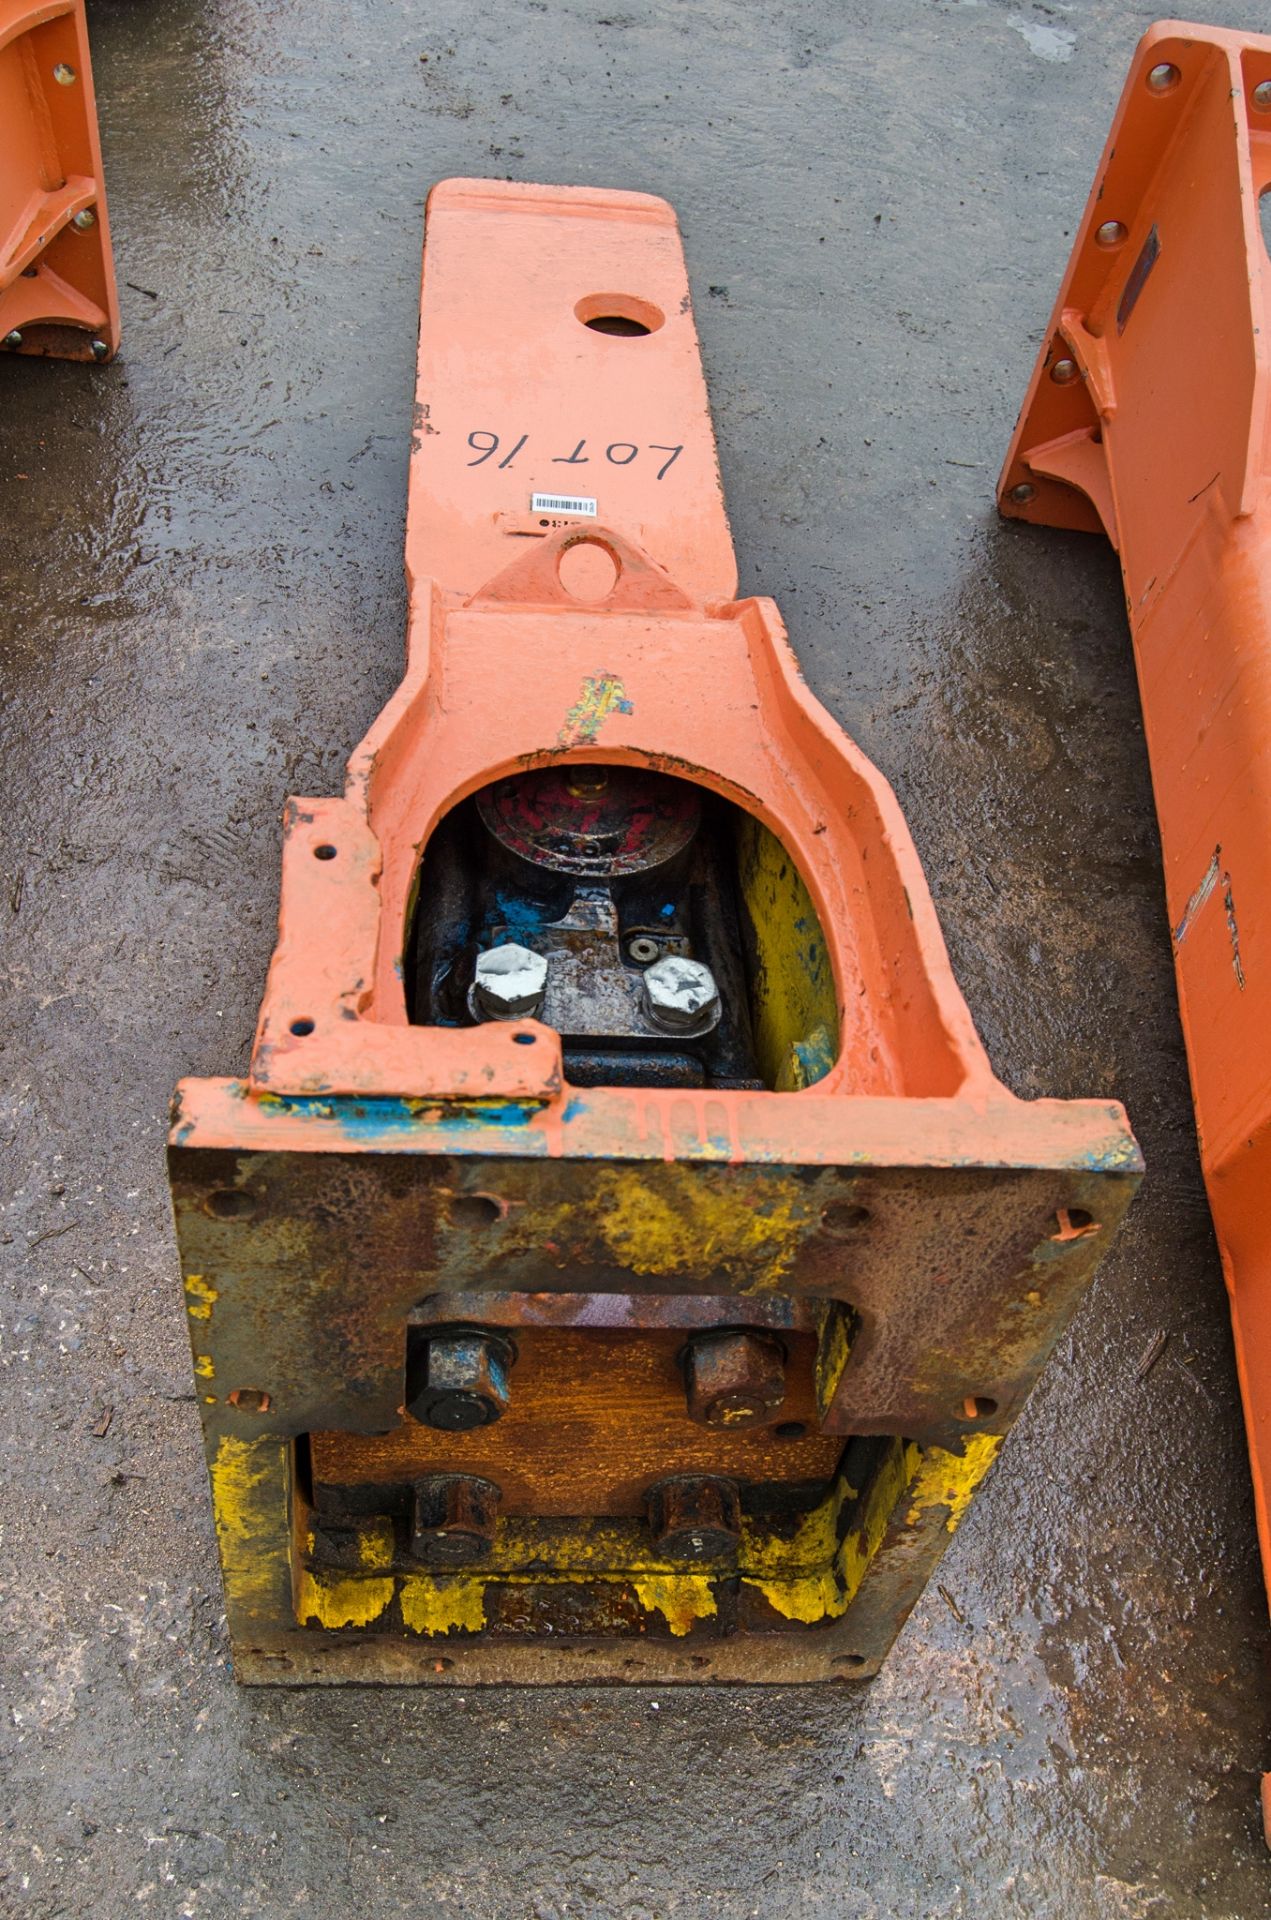 Hydraulic breaker to suit 13-18 tonne excavator SH1130 ** Incomplete and no headstock ** - Bild 4 aus 4